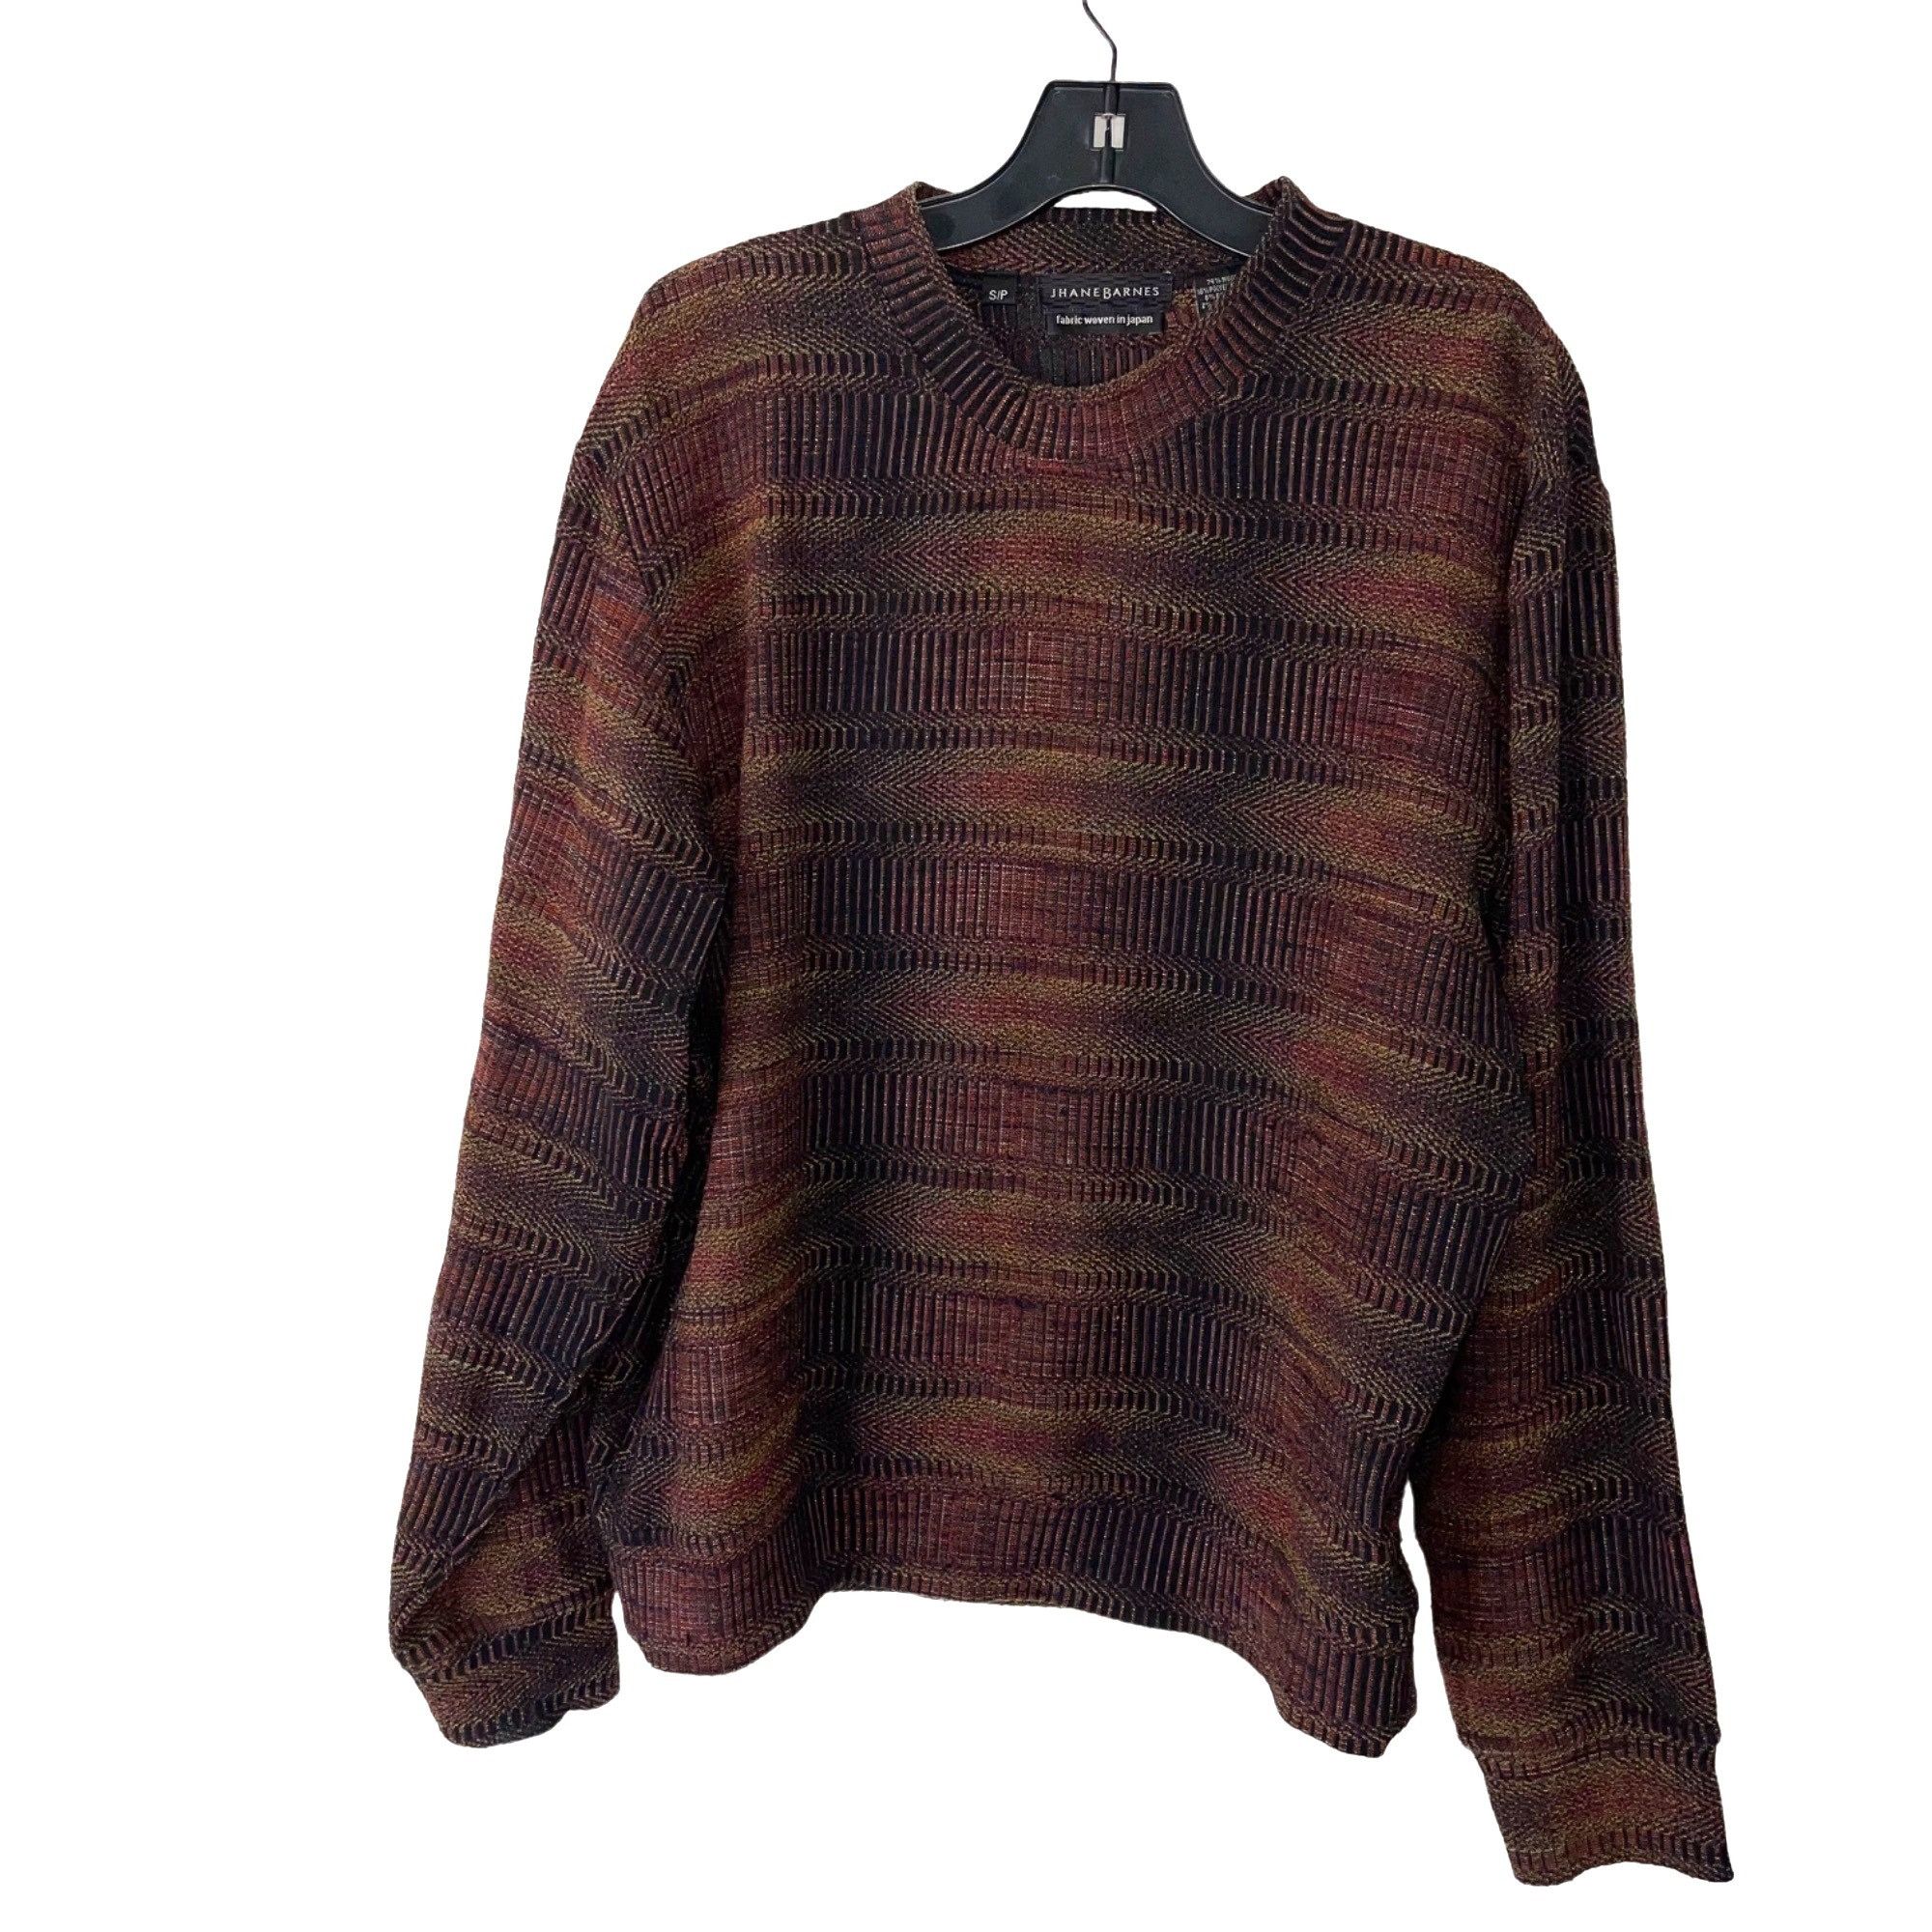 Jhane Barnes Jhane Barnes Sweater Small Vintage Wool Rayon Blend | Grailed